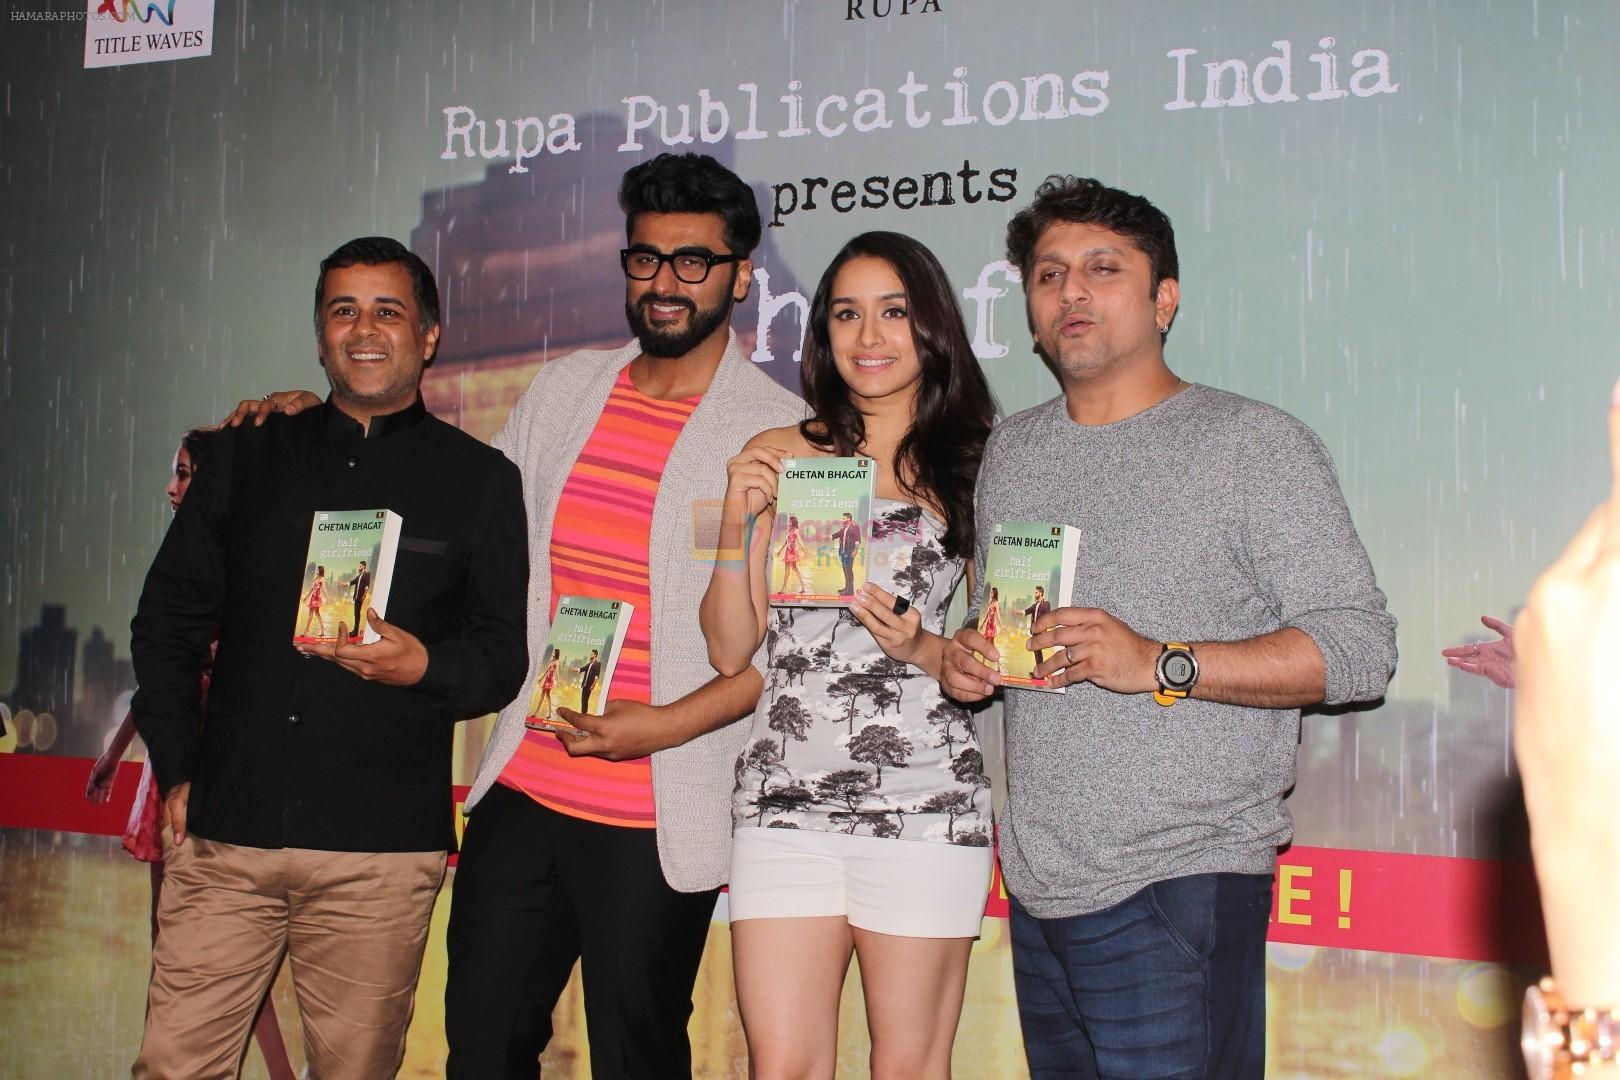 Arjun Kapoor, Shraddha Kapoor, Mohit Suri, Chetan Bhagat at The Book Launch Of Half Girlfriend on 8th May 2017